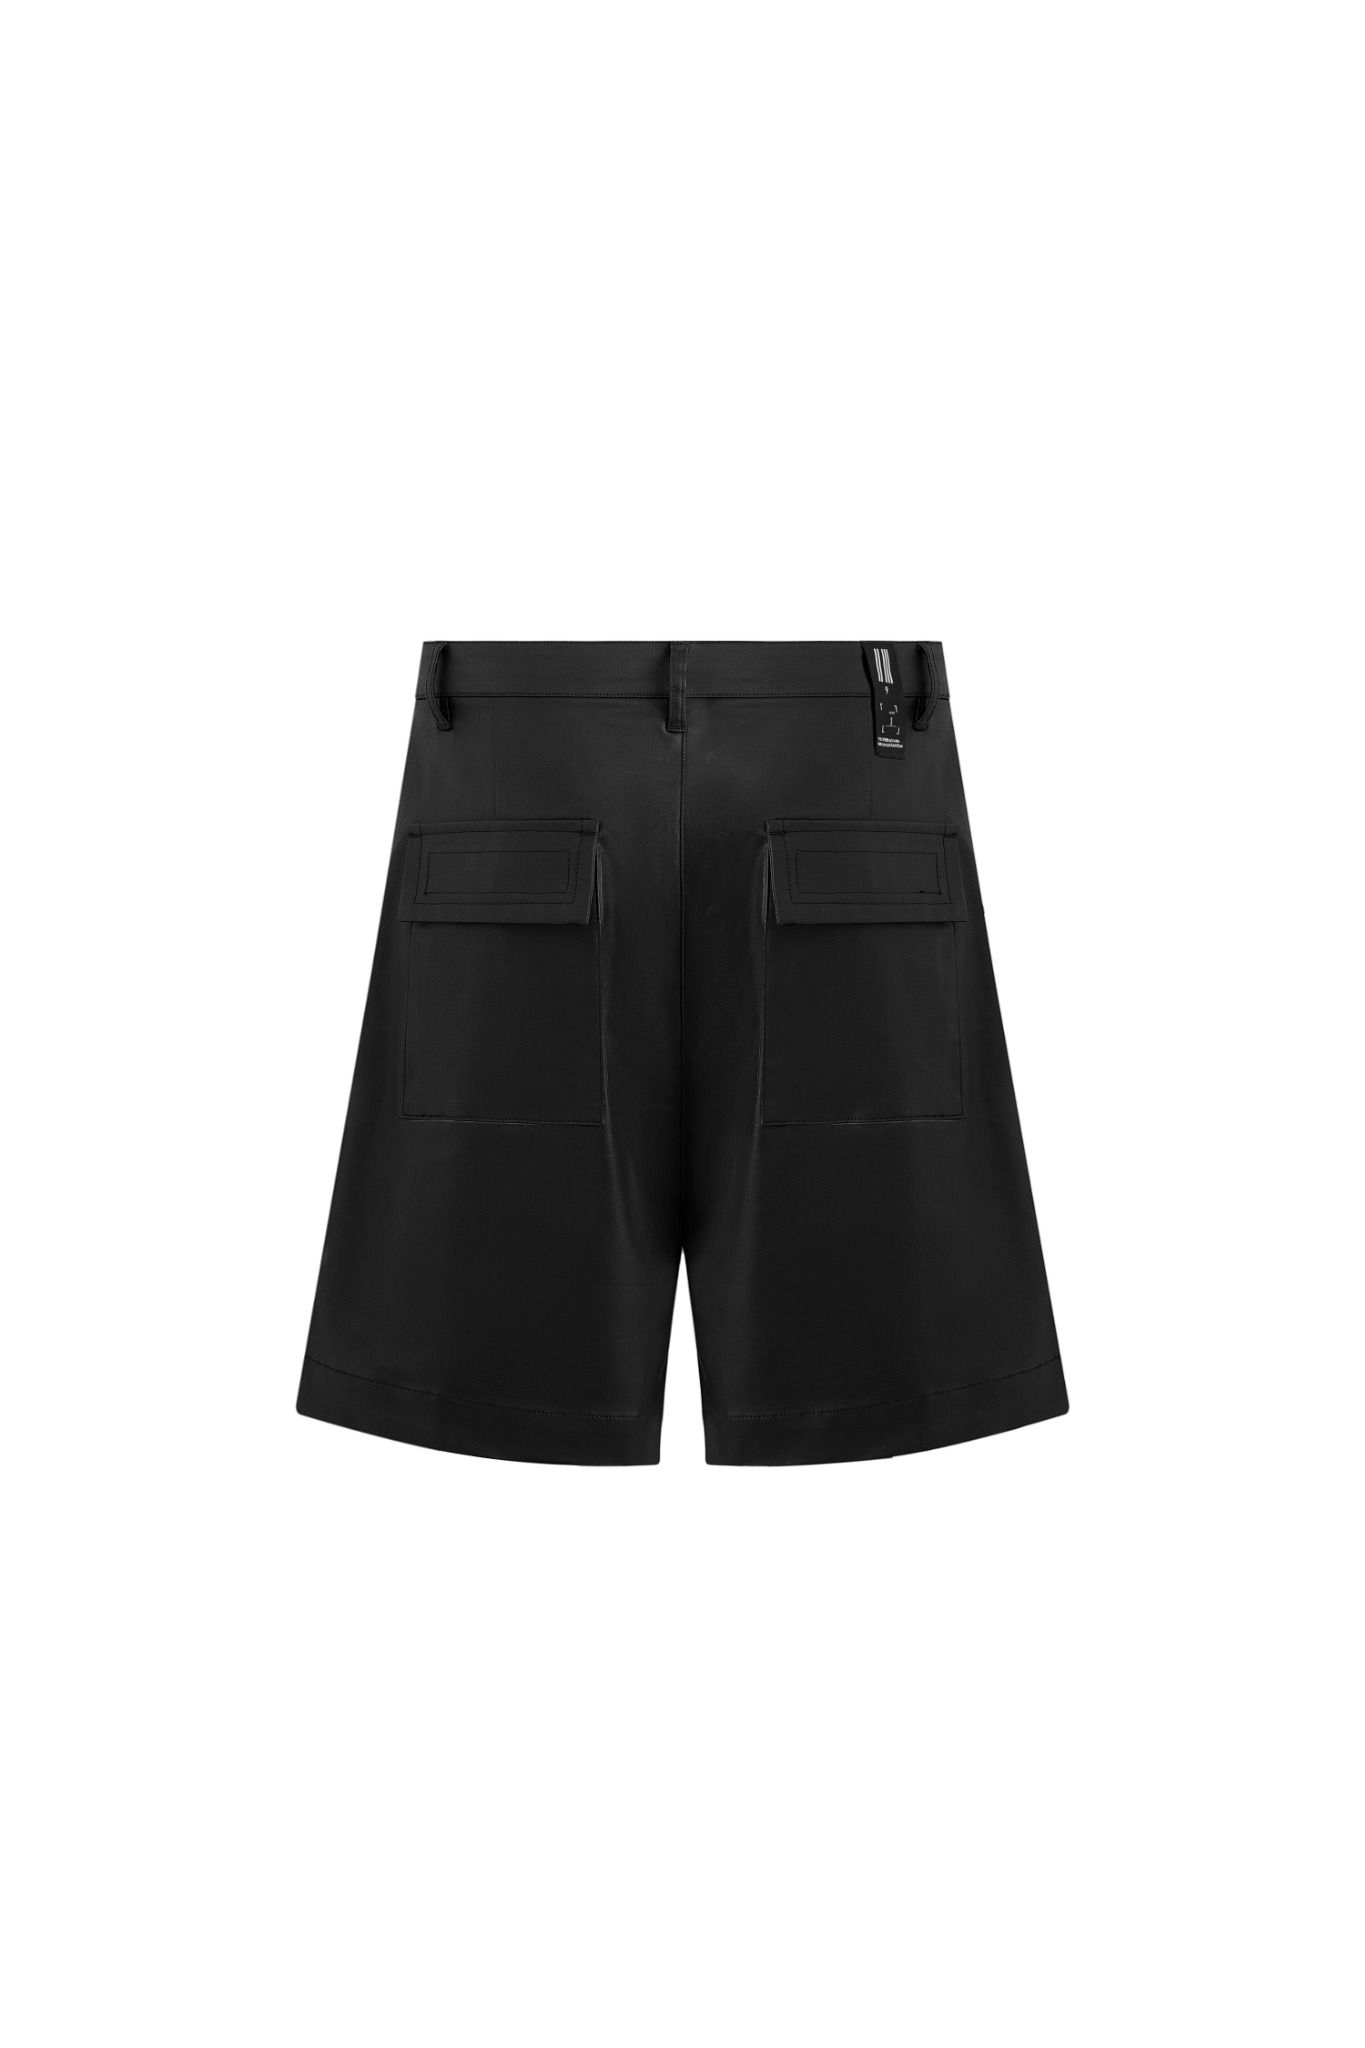  23'ML shorts/ MW / Black 